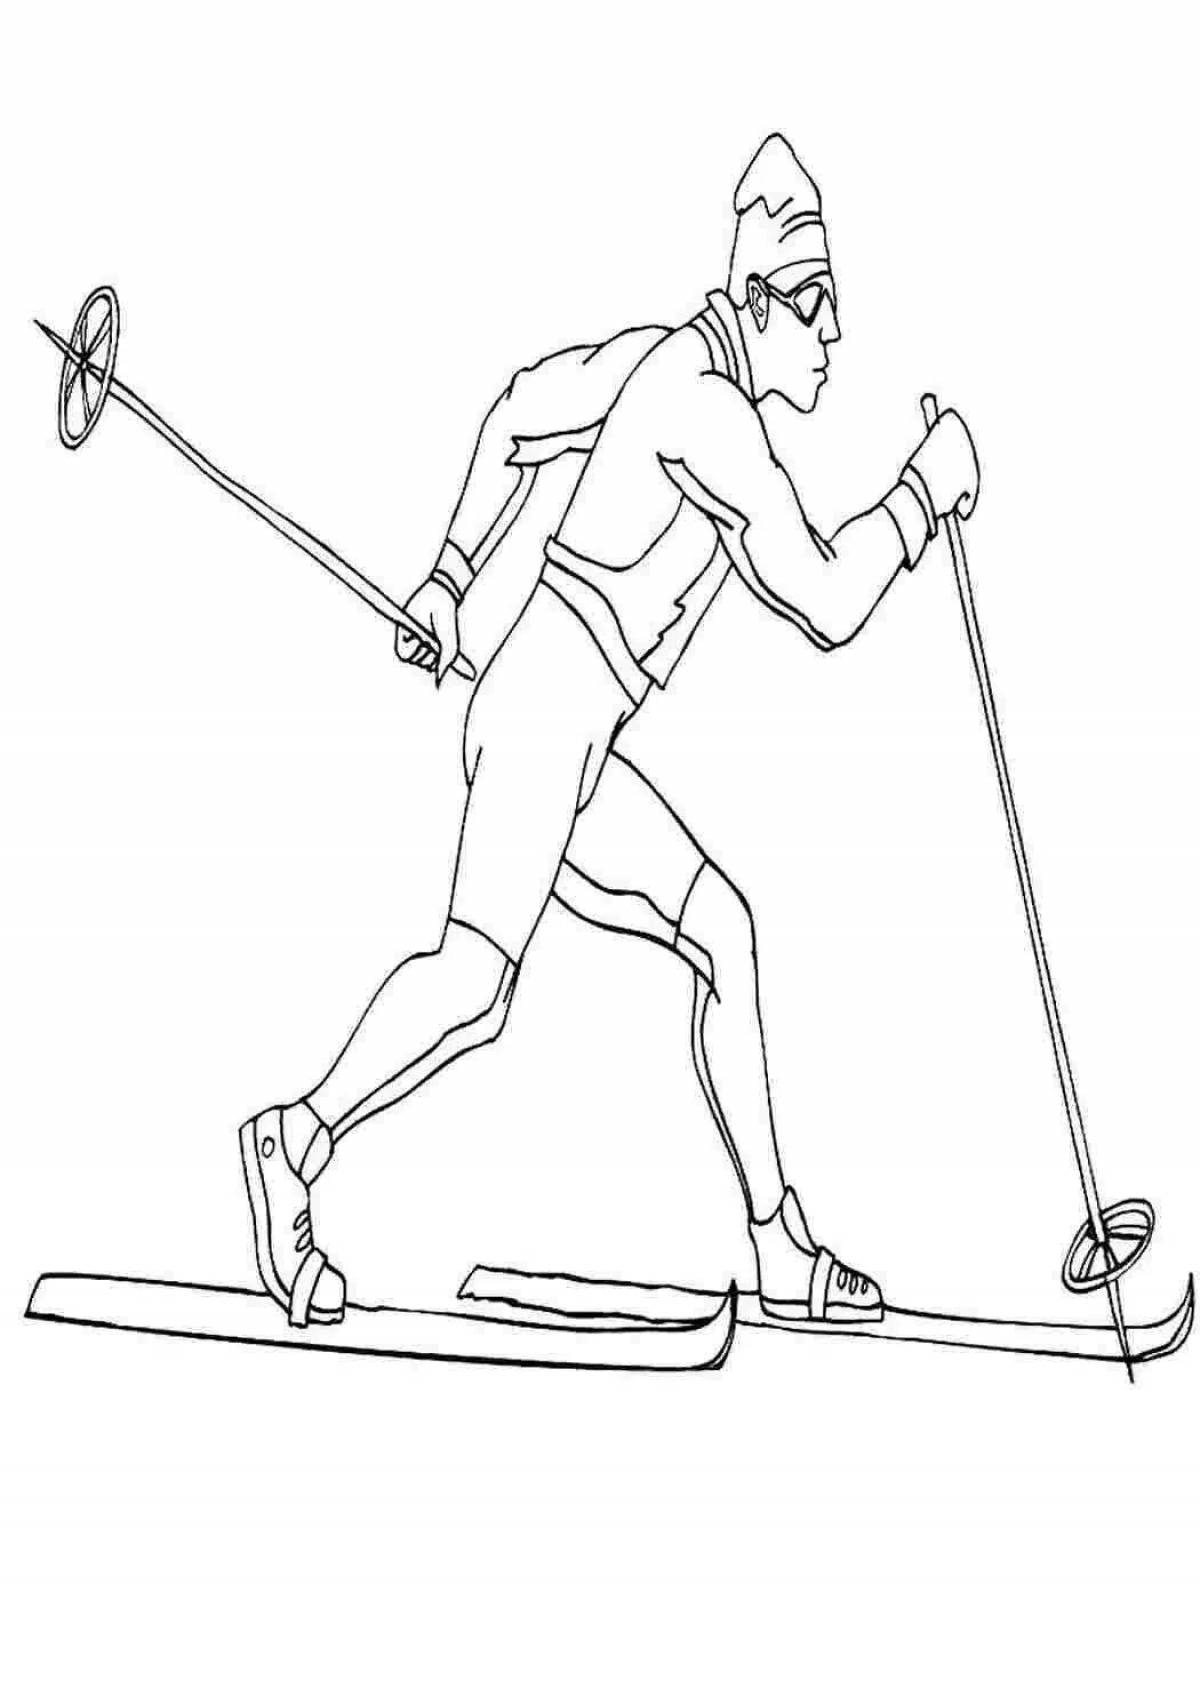 Skier in motion #13